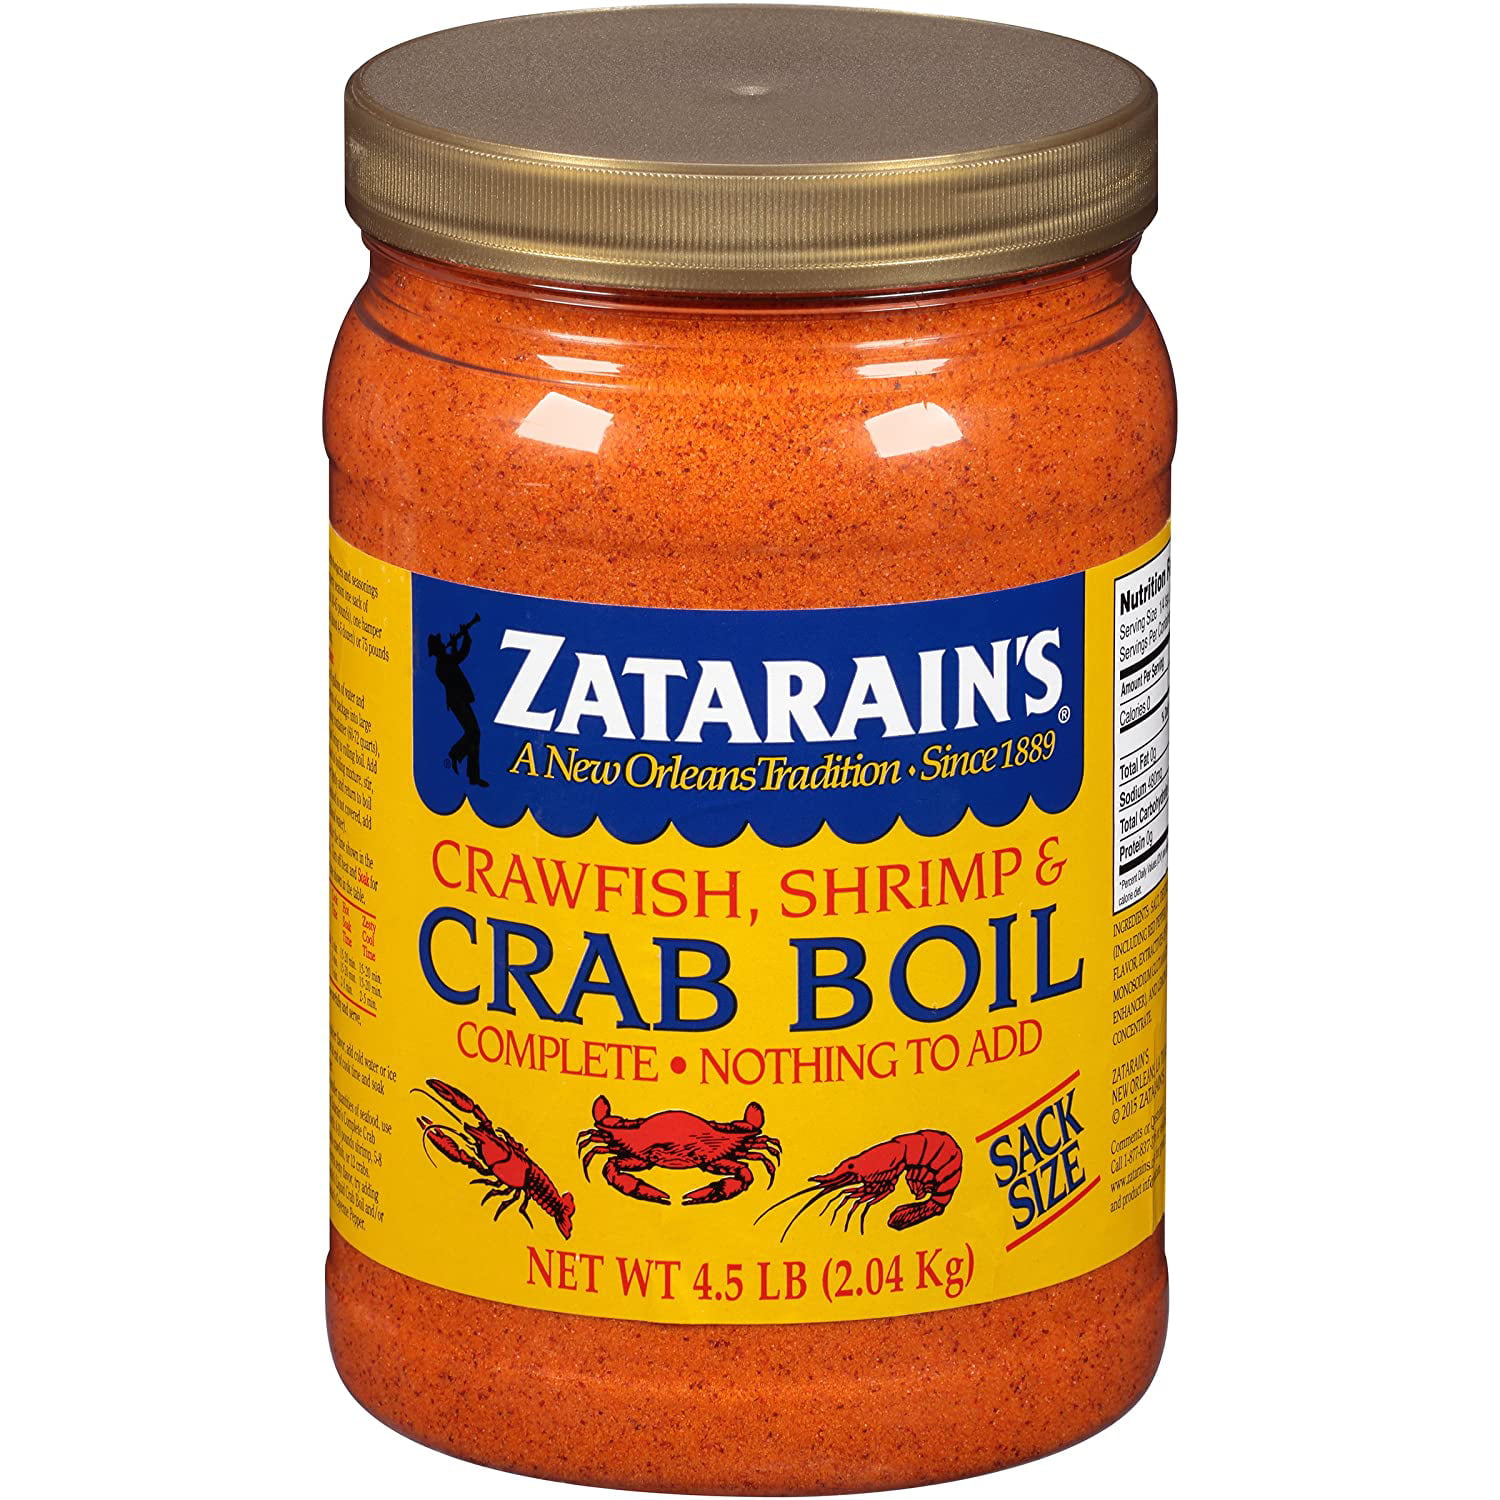 Where To Buy Zatarain's Crab Boil Near Me